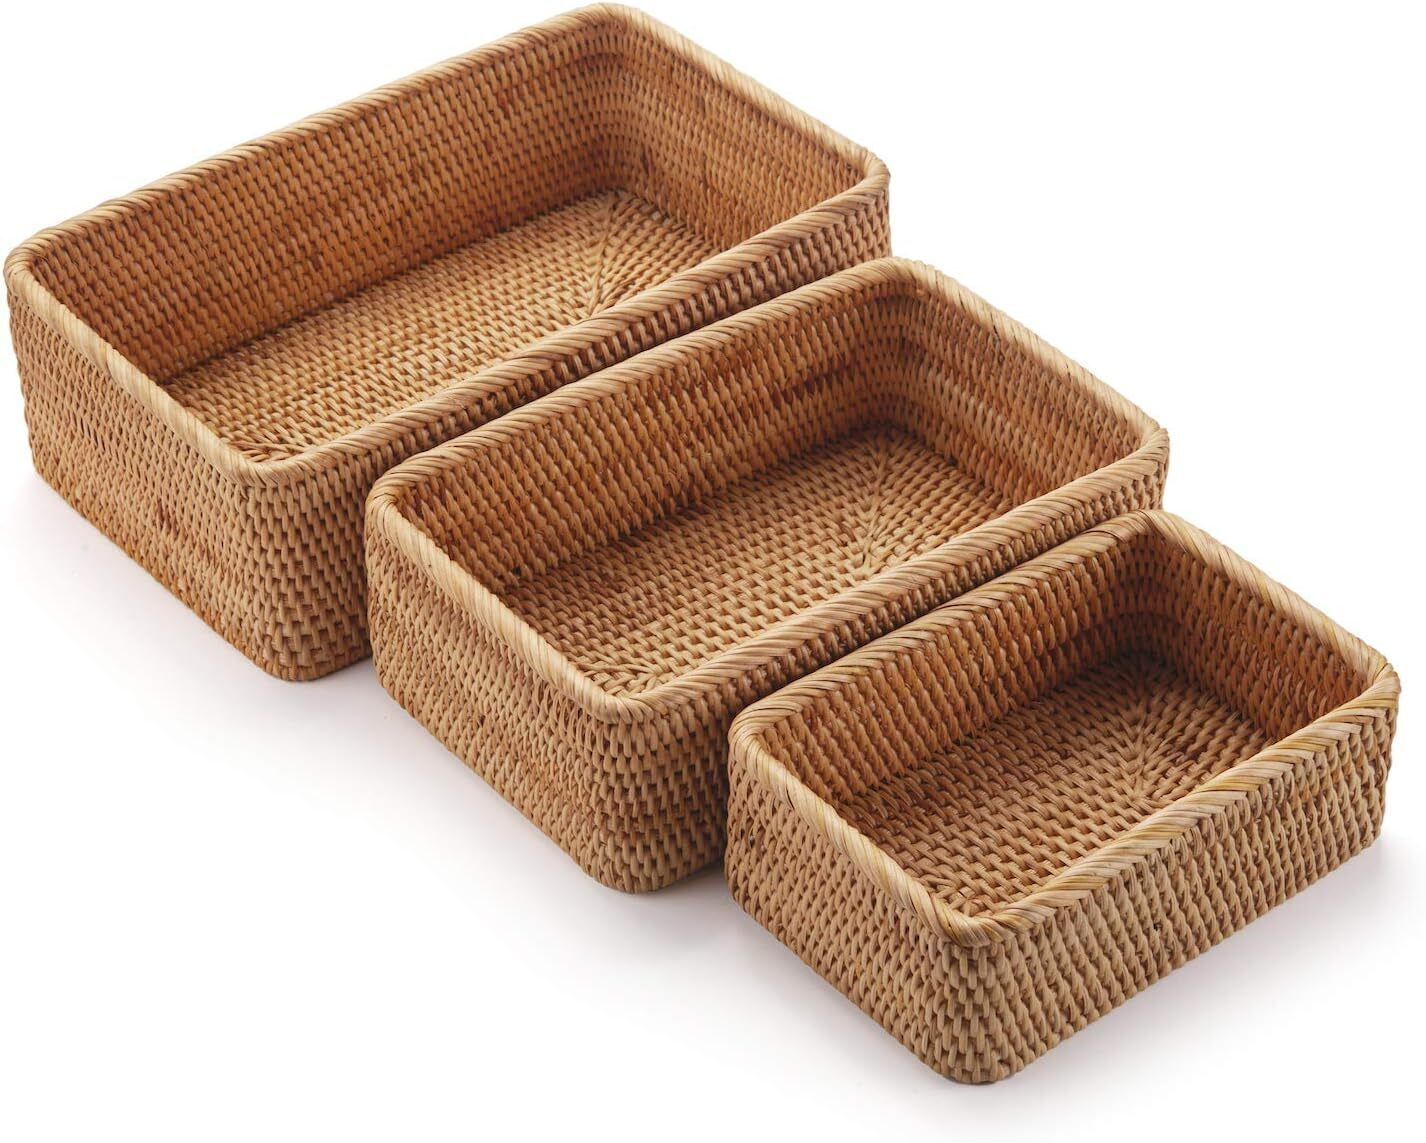 Rattan Fruit Storage Baskets Rectangular Woven Wicker Box for Key Holder